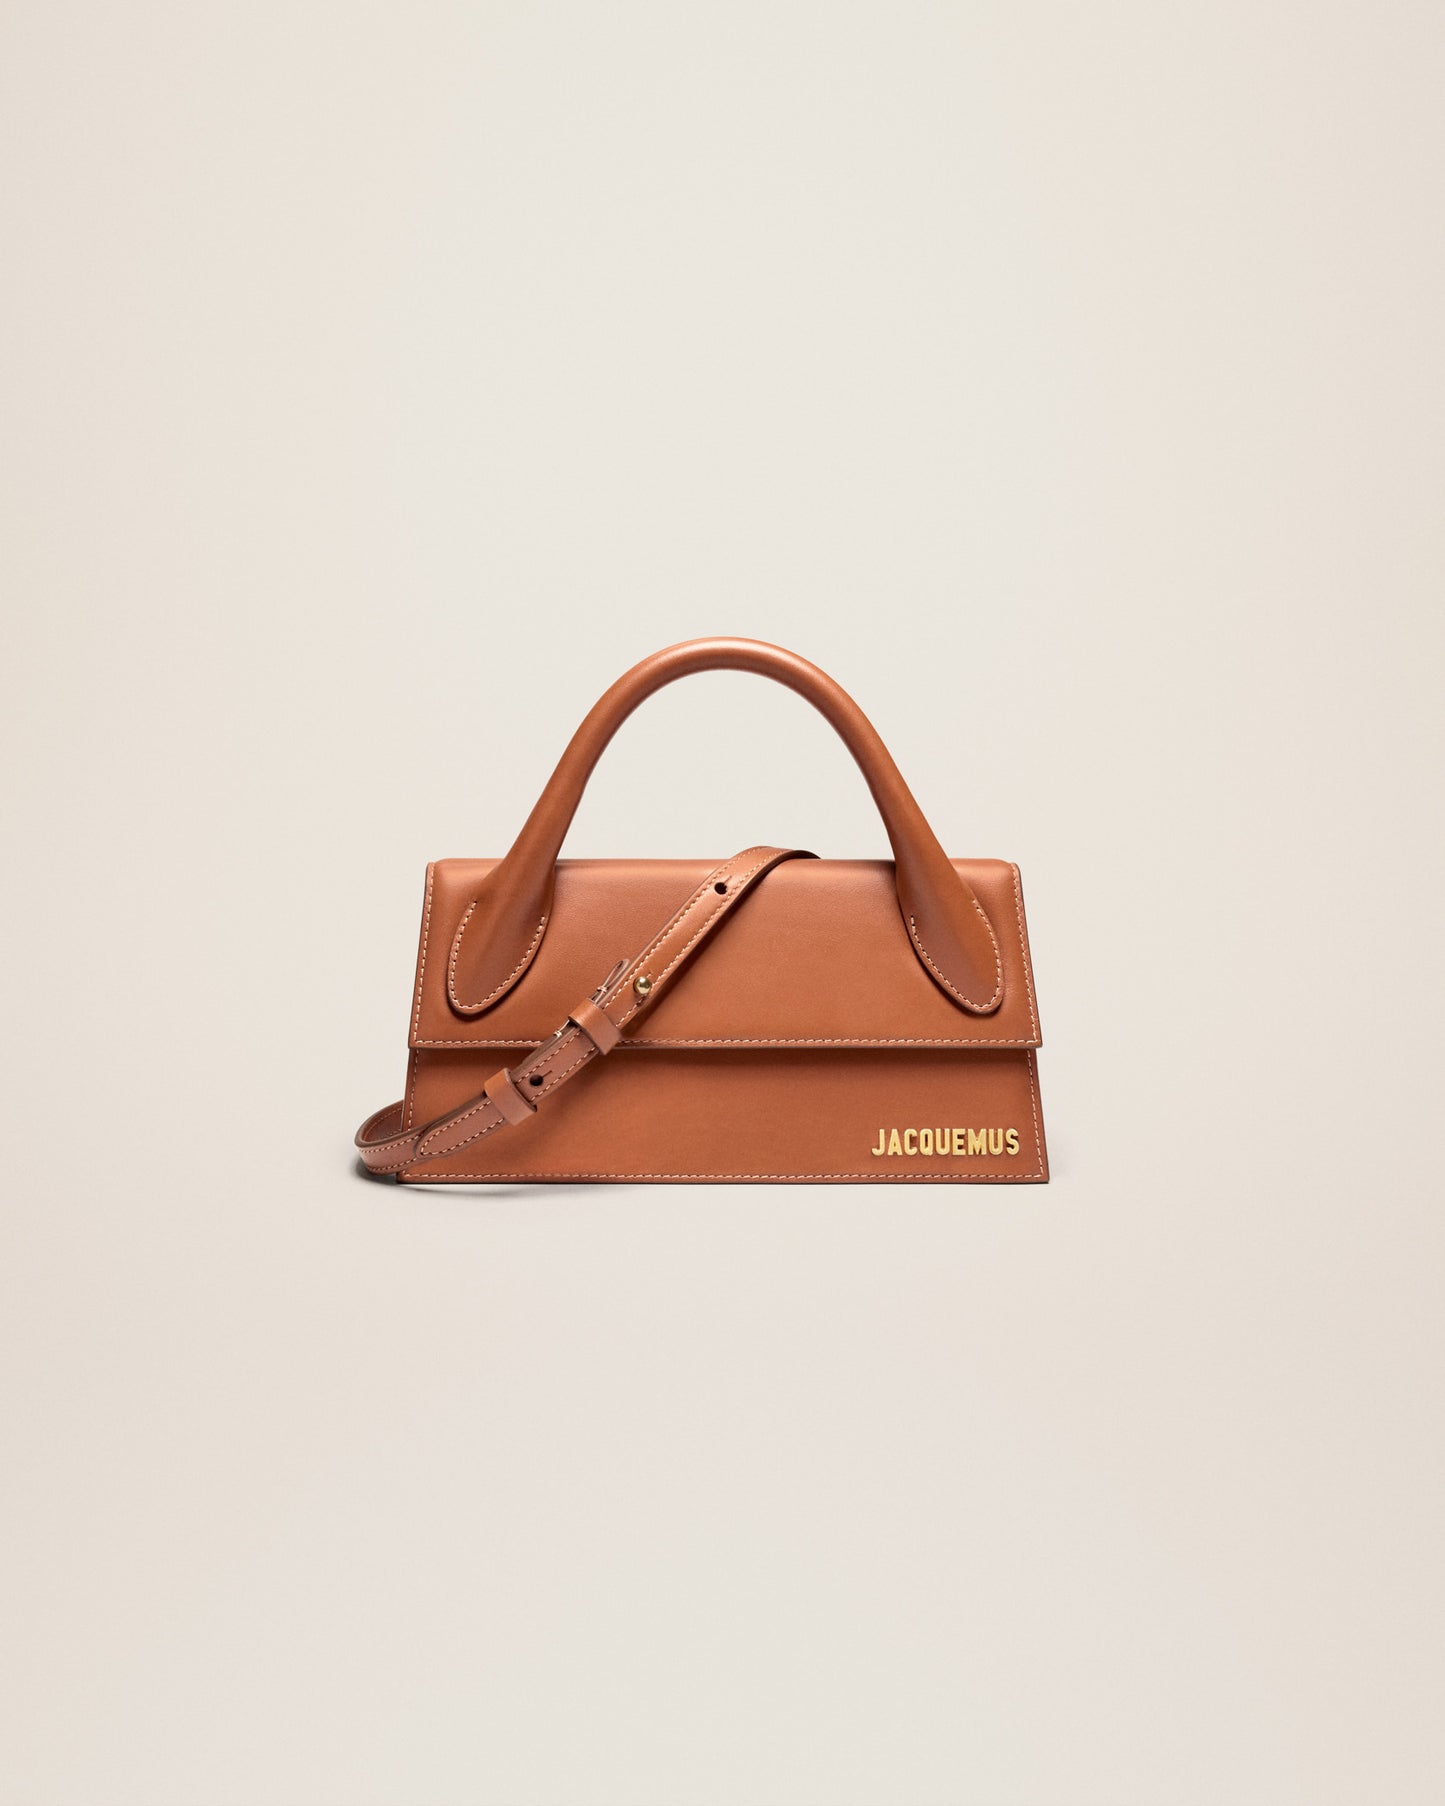 JACQUEMUS Le Chiquito Long Handbag Review